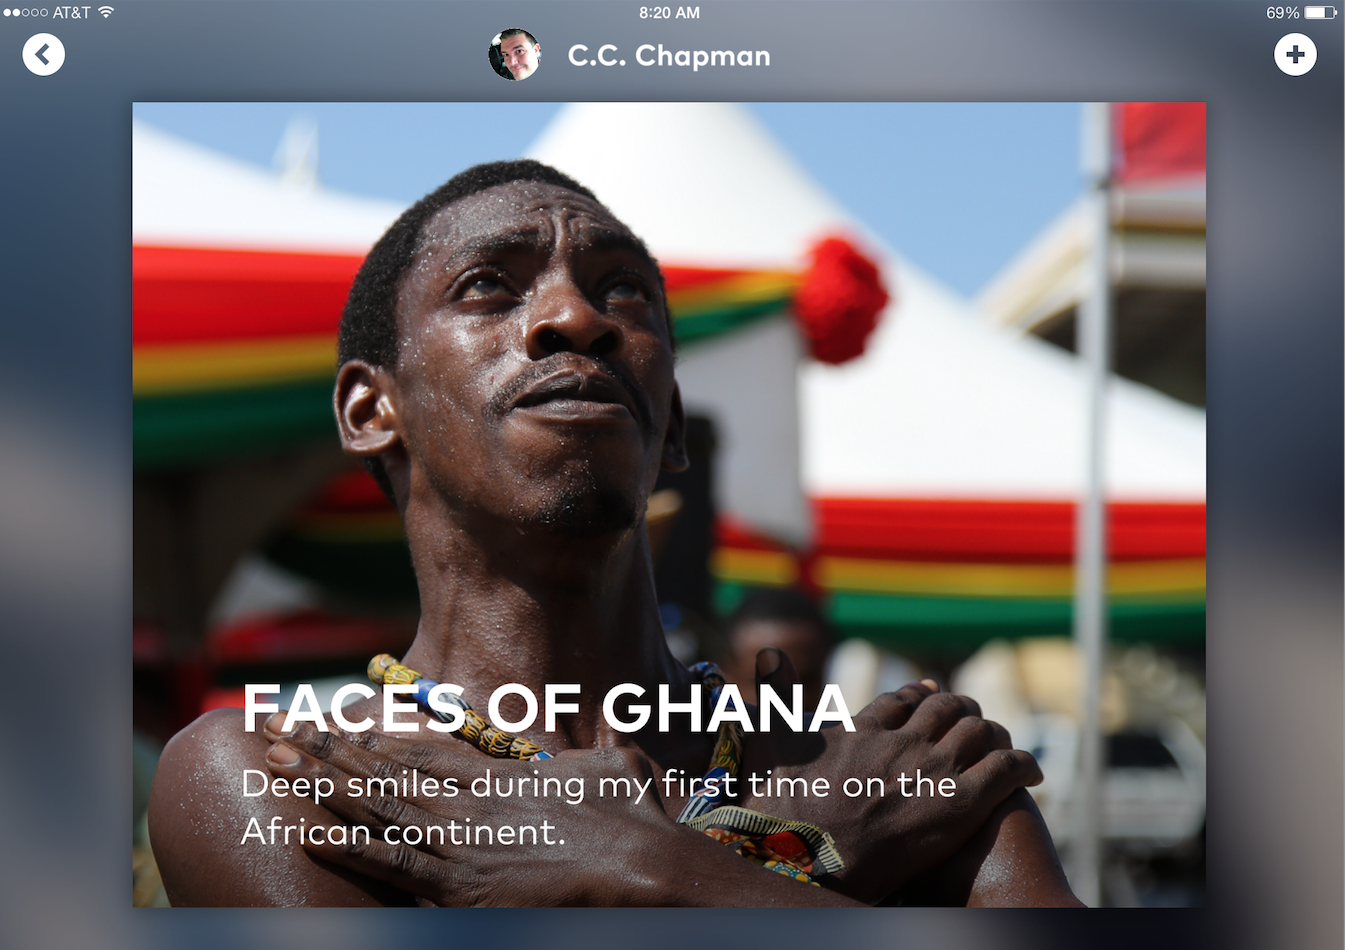 Faces of Ghana